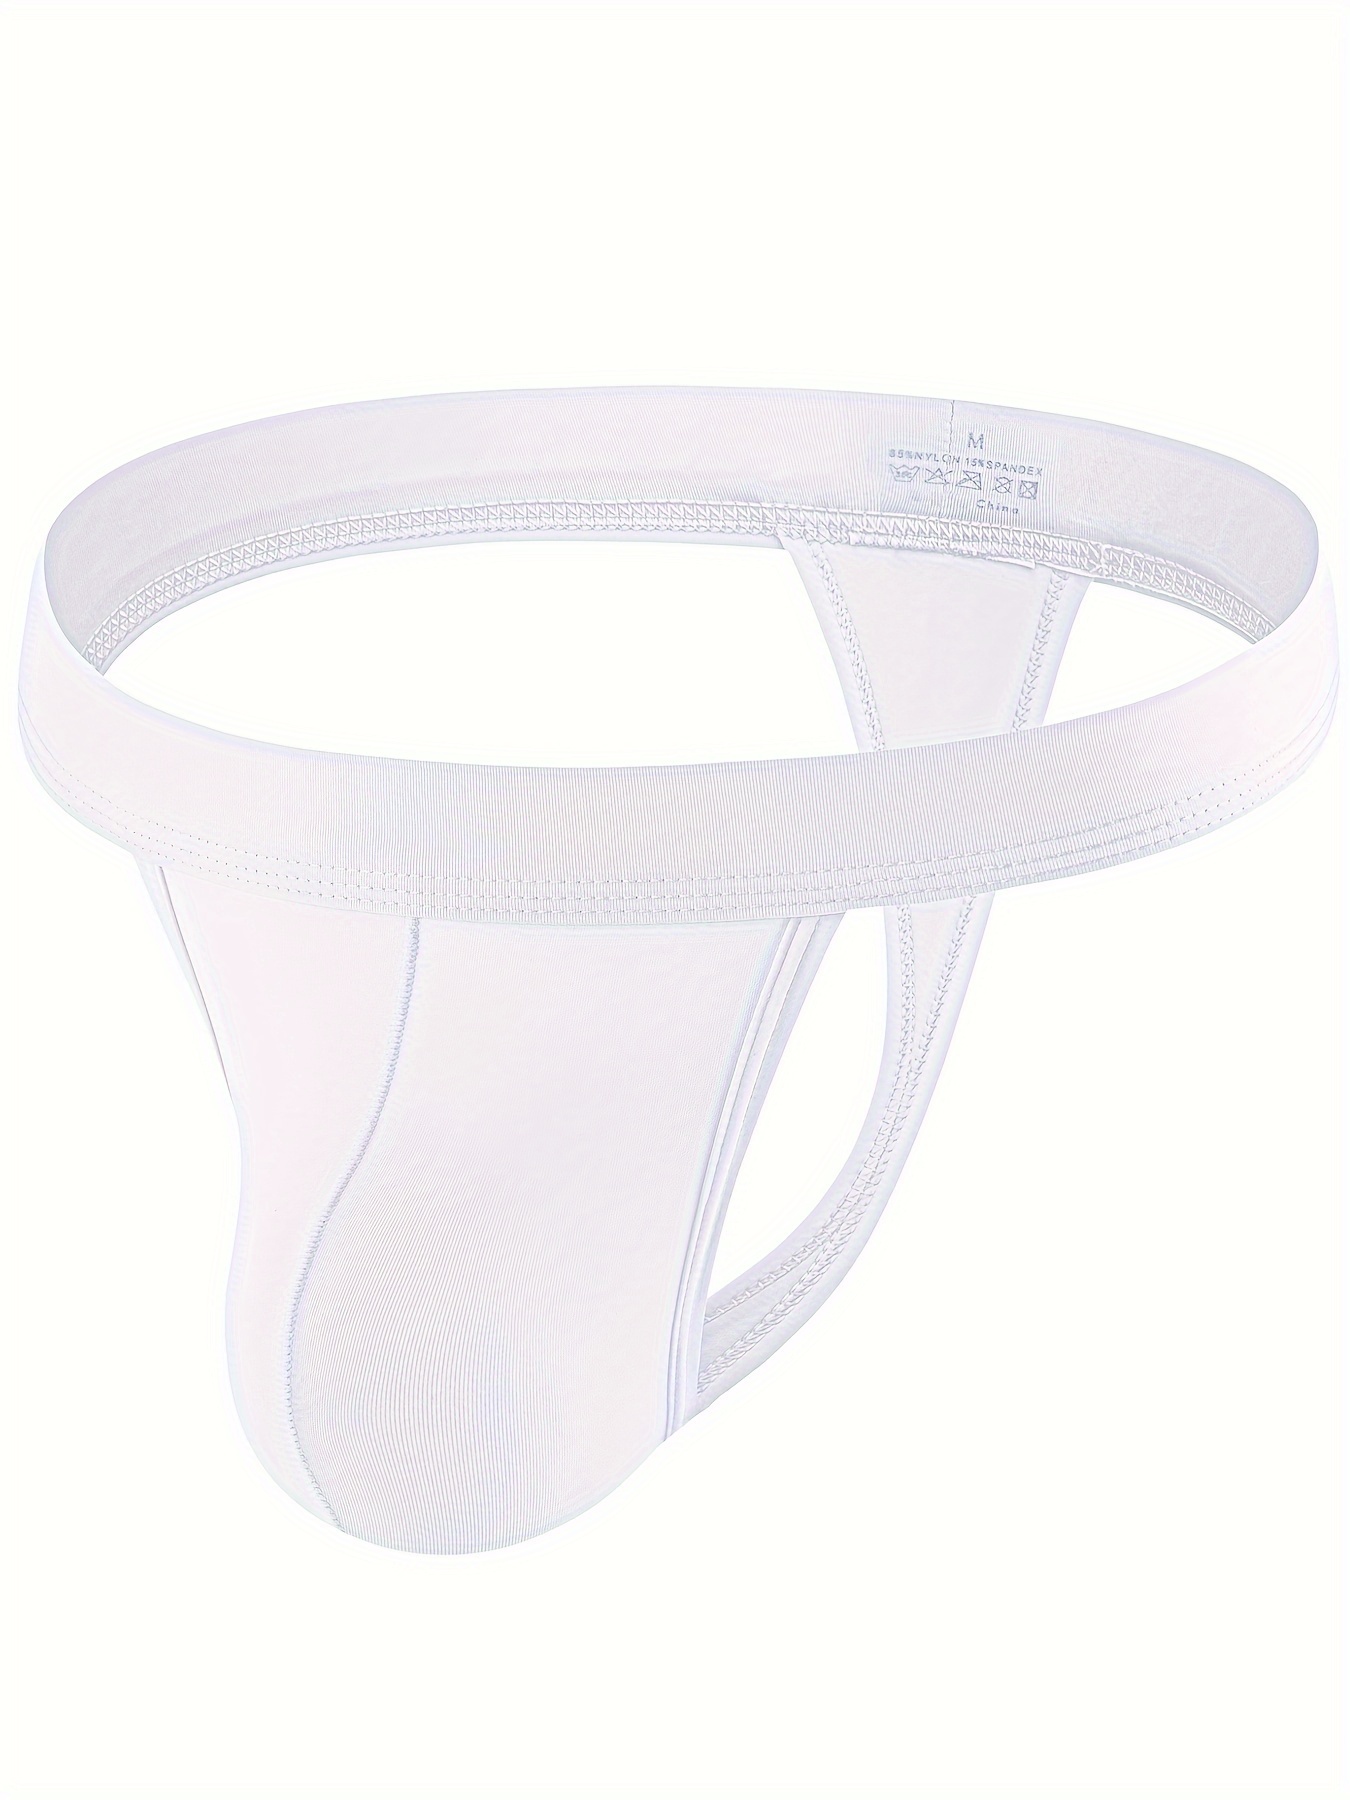 4pcs mens padded underwear Bulge Enhancer Cup Underwear Enlarge